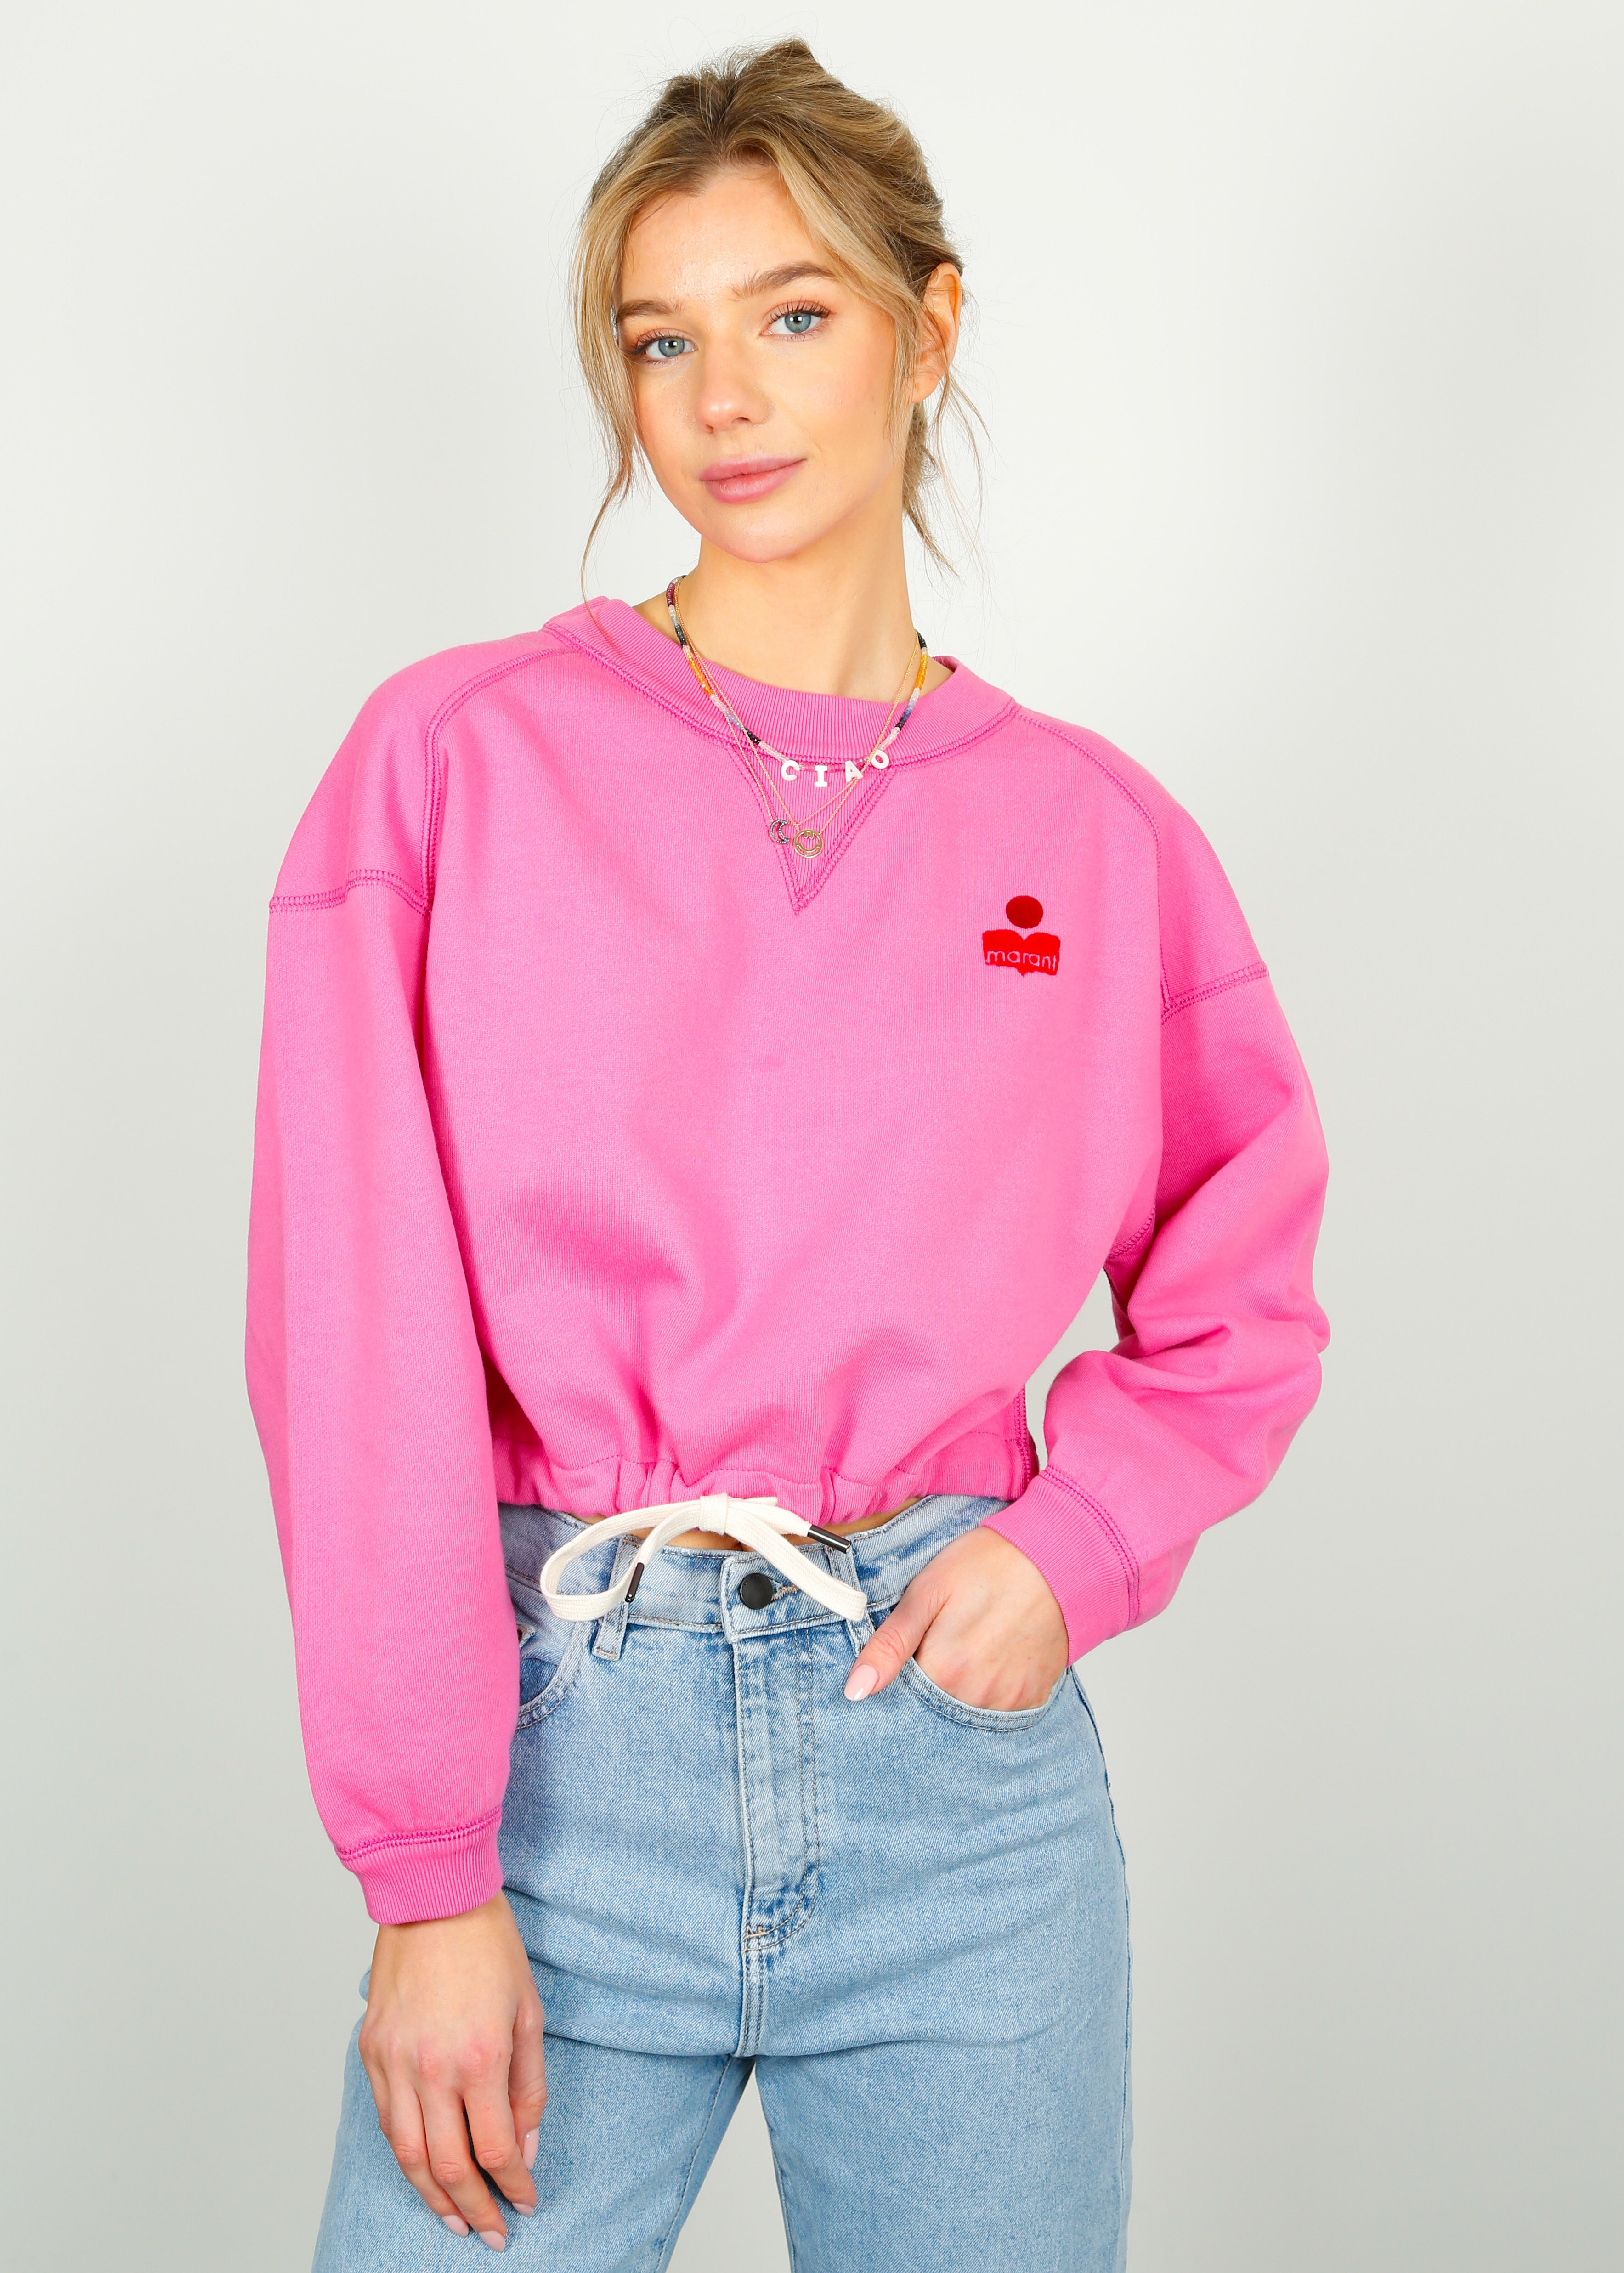 IM Margo Sweatshirt Top in Pink